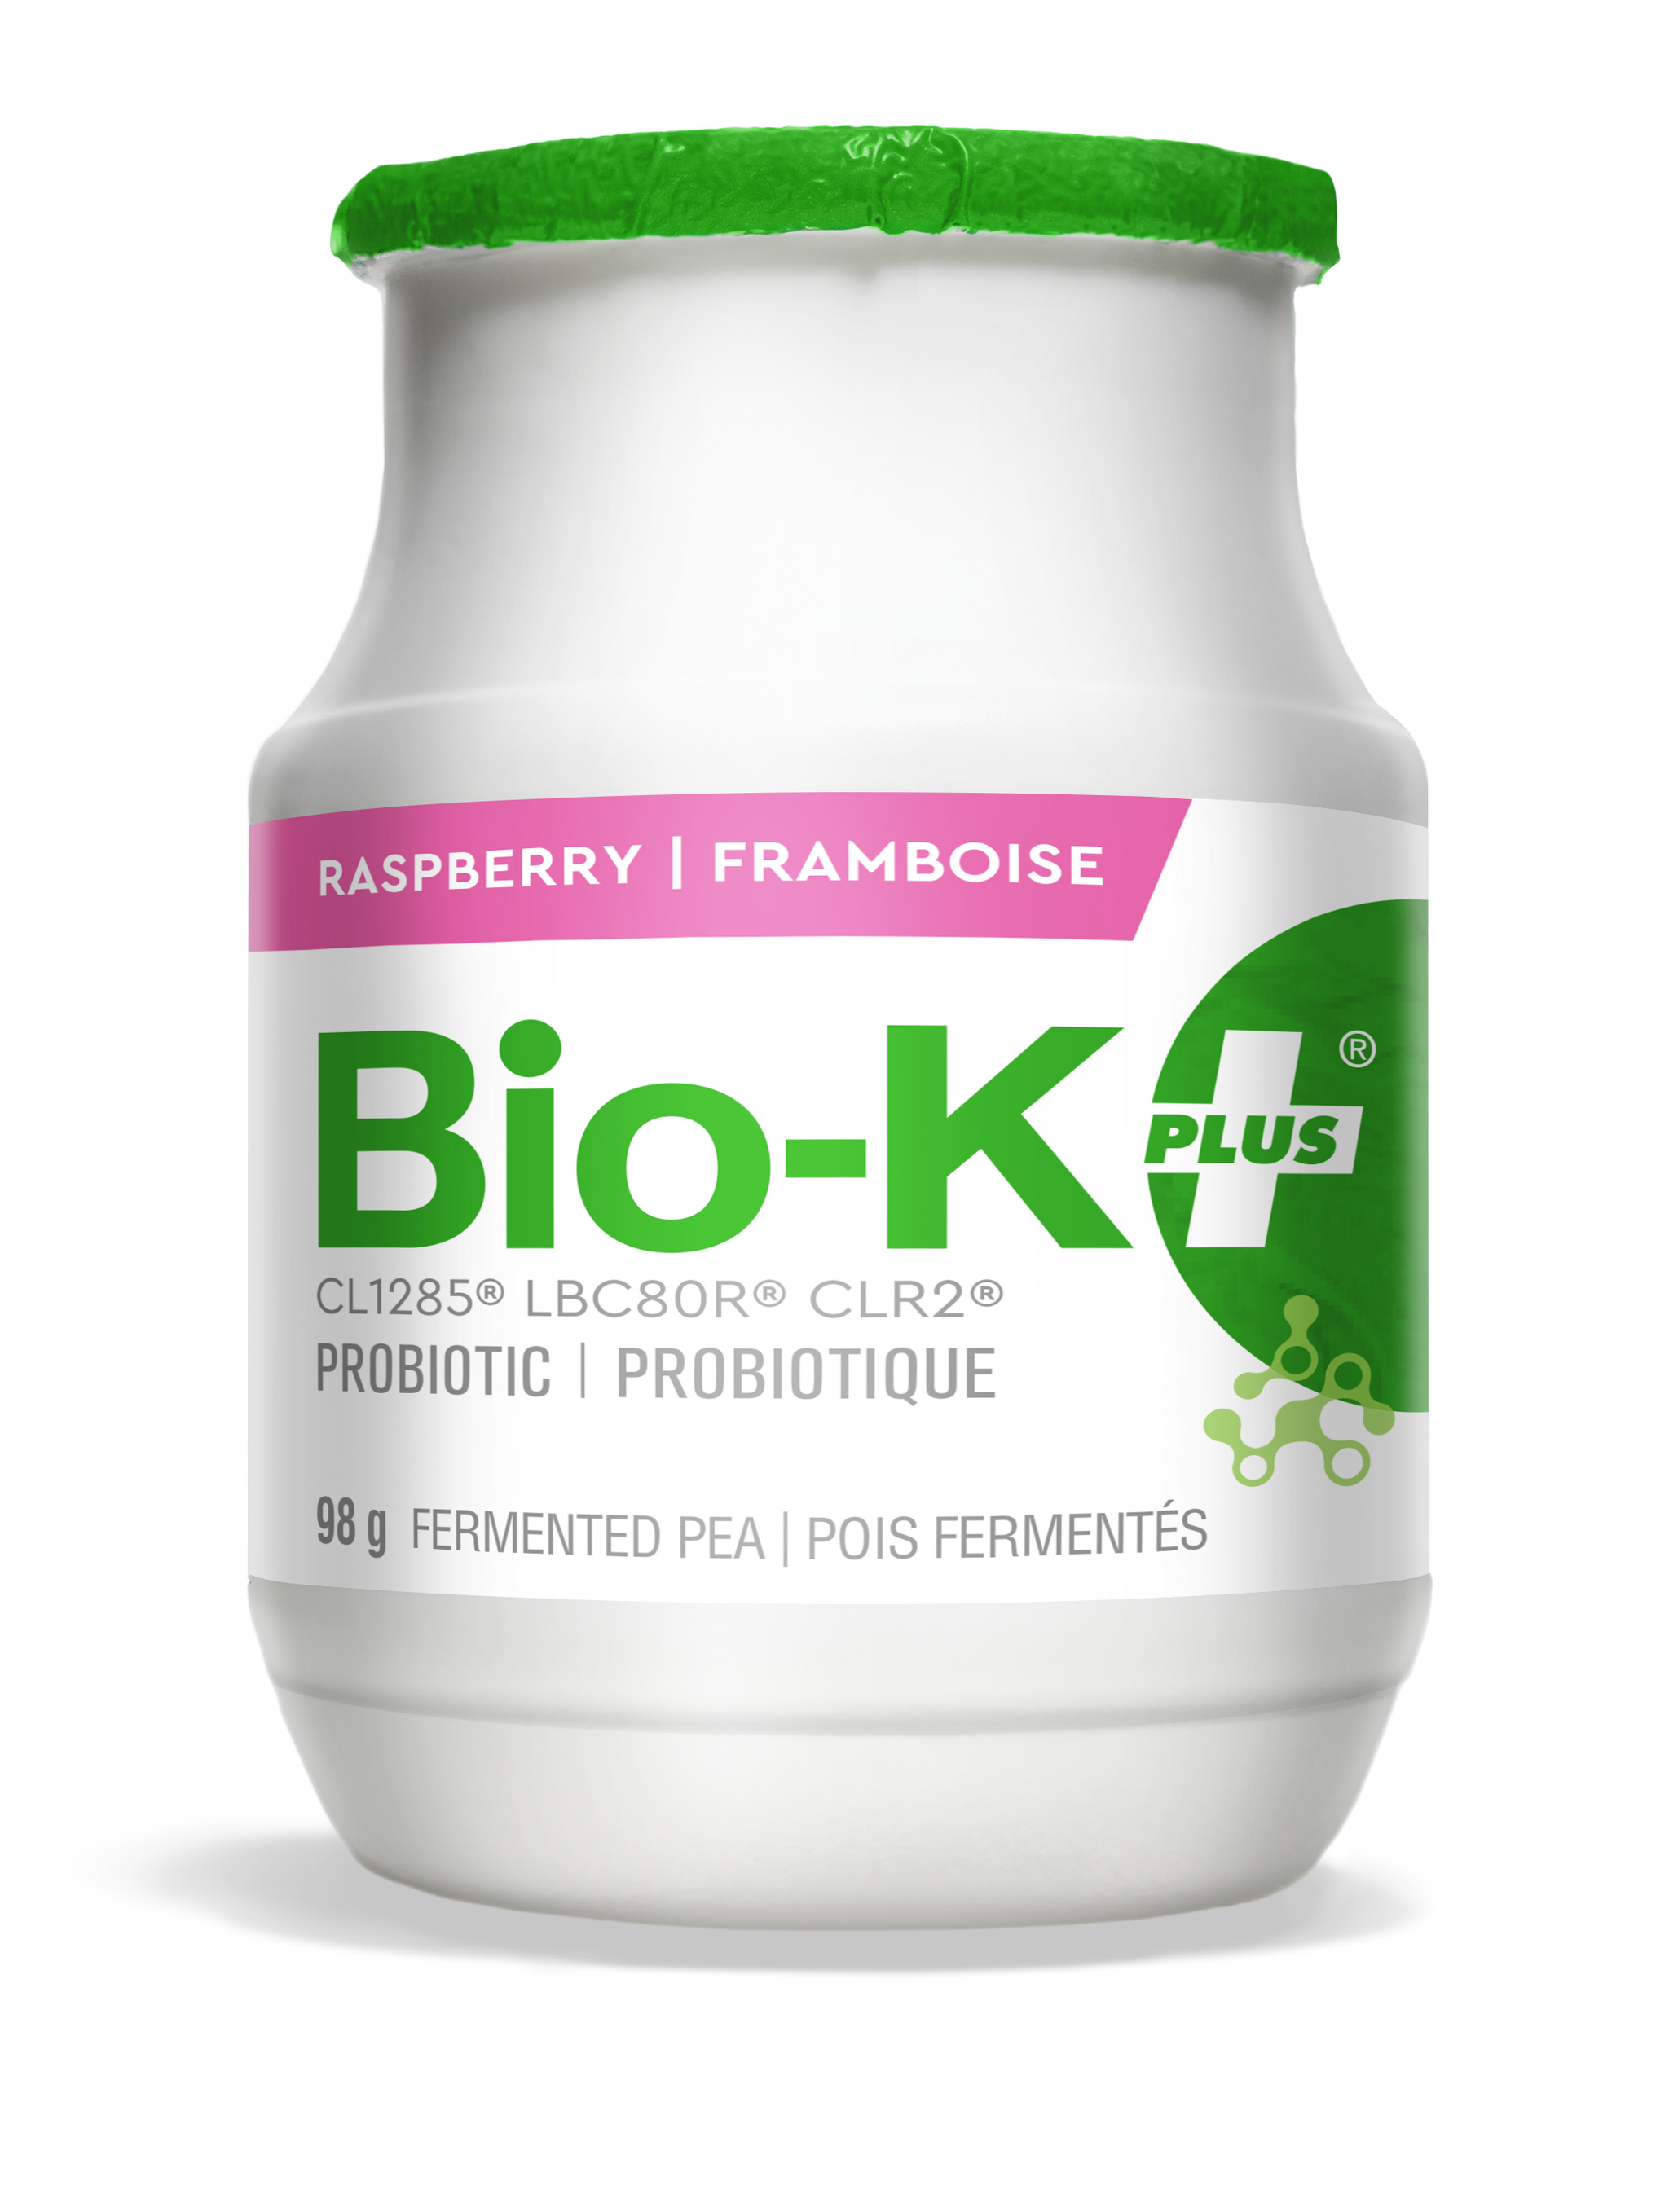 Bottle of Drinkable Vegan Probiotics - Fermeted pea base - Rasberry flavour